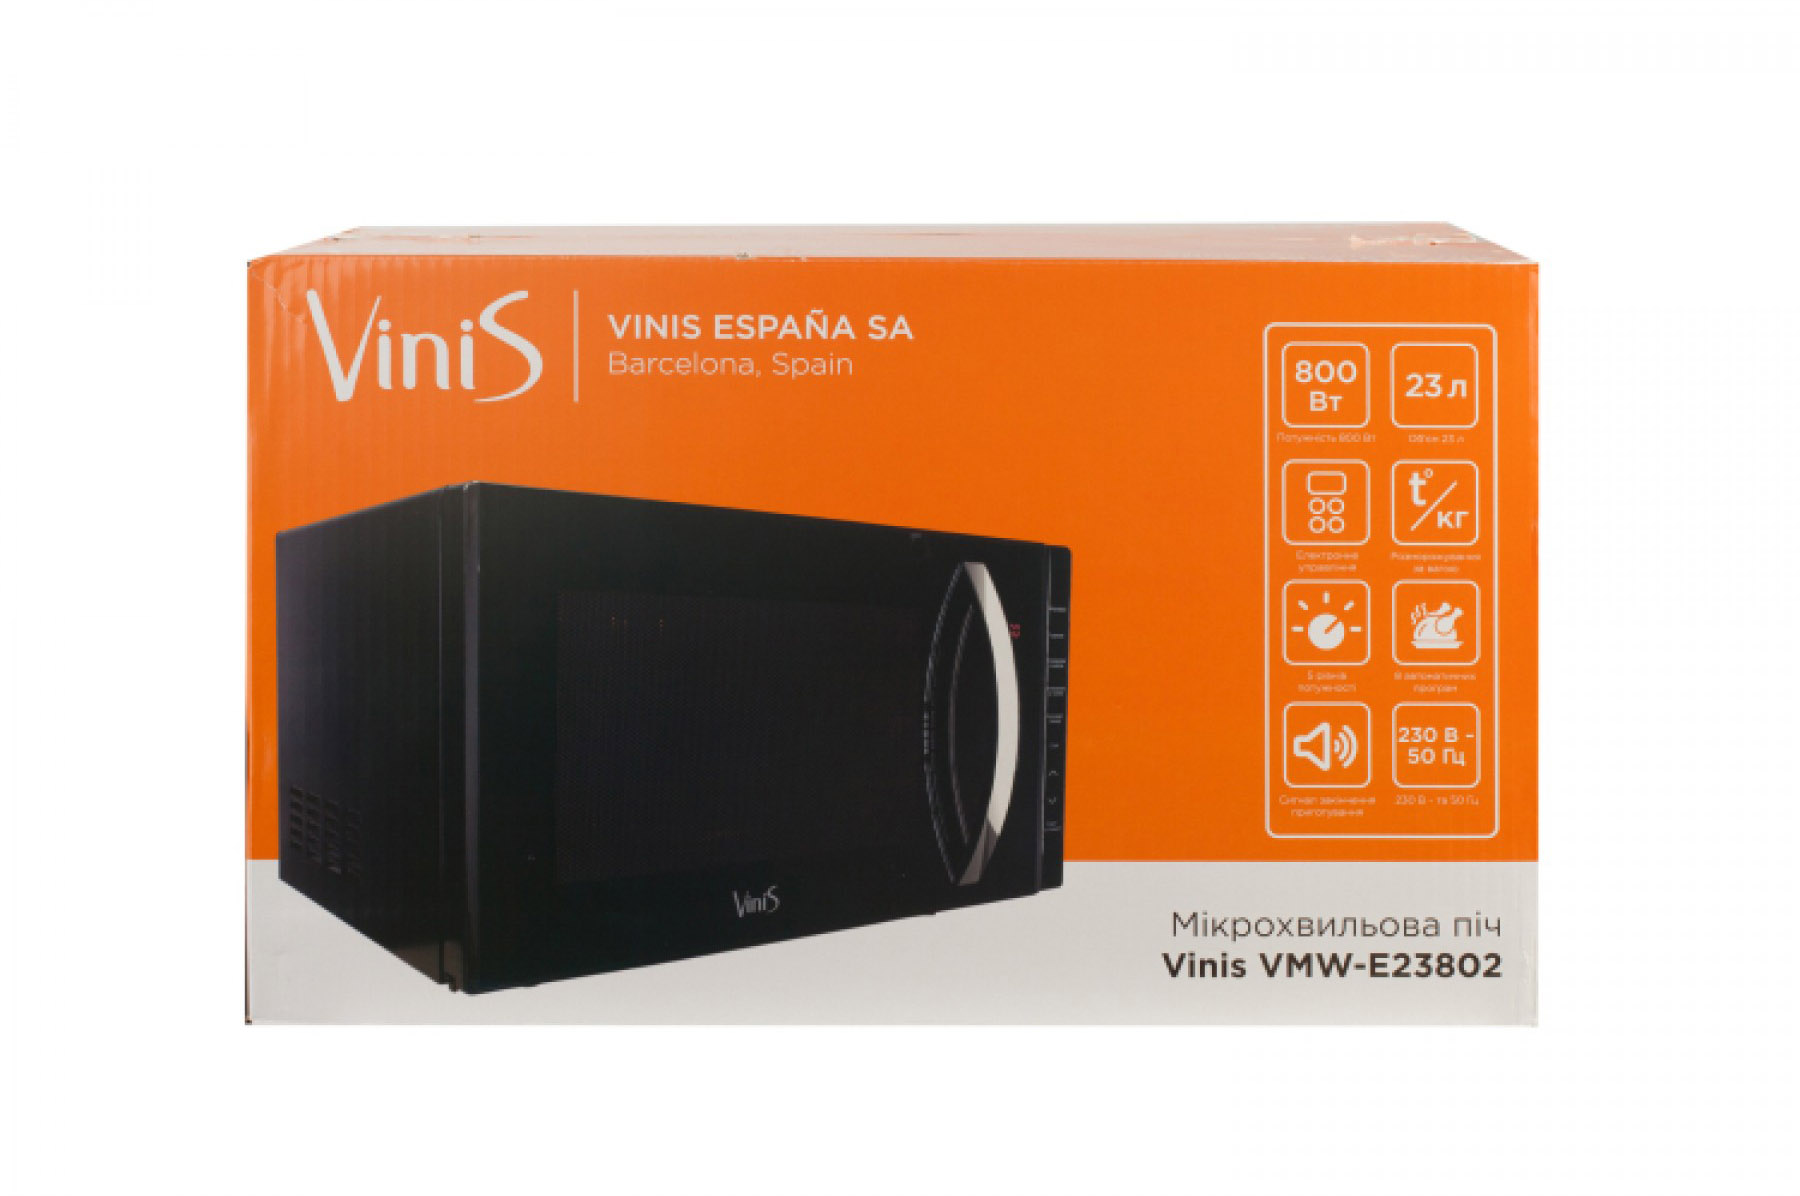 Микроволновая печь Vinis VMW-E23802B цена 0.00 грн - фотография 2